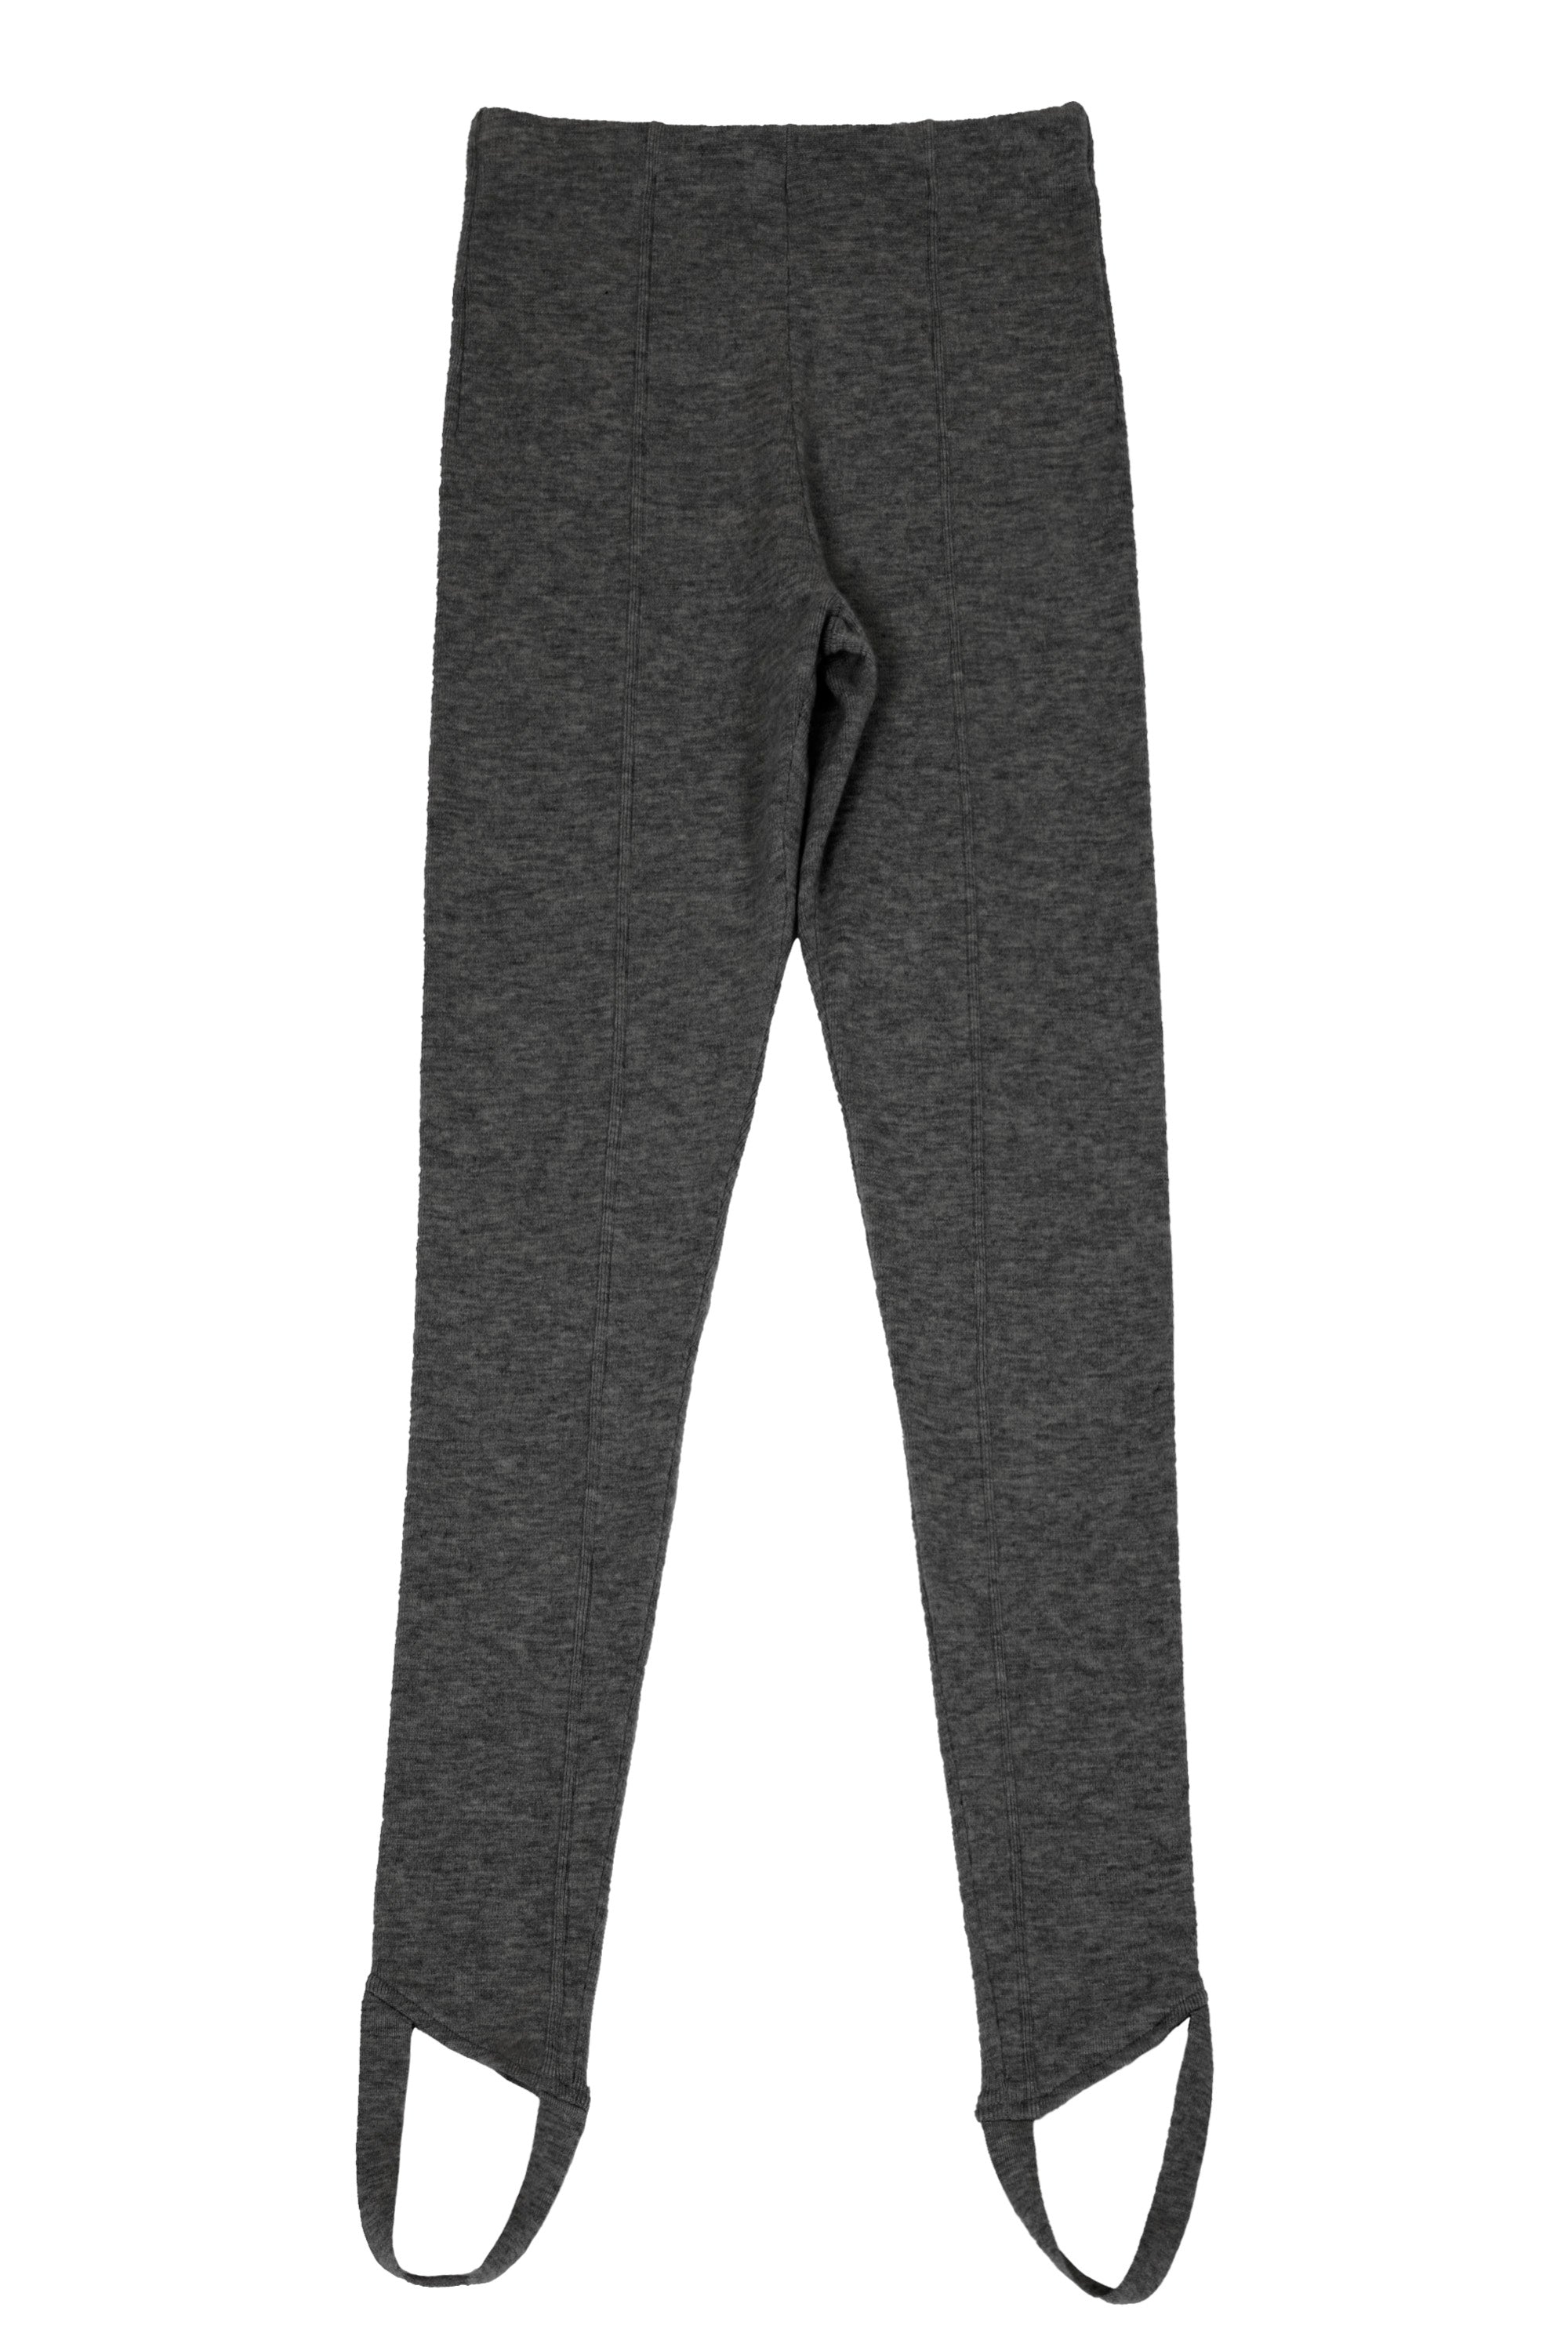 Cashmere Leggings | Charcoal Grey – MYLAN ONLINE SHOP